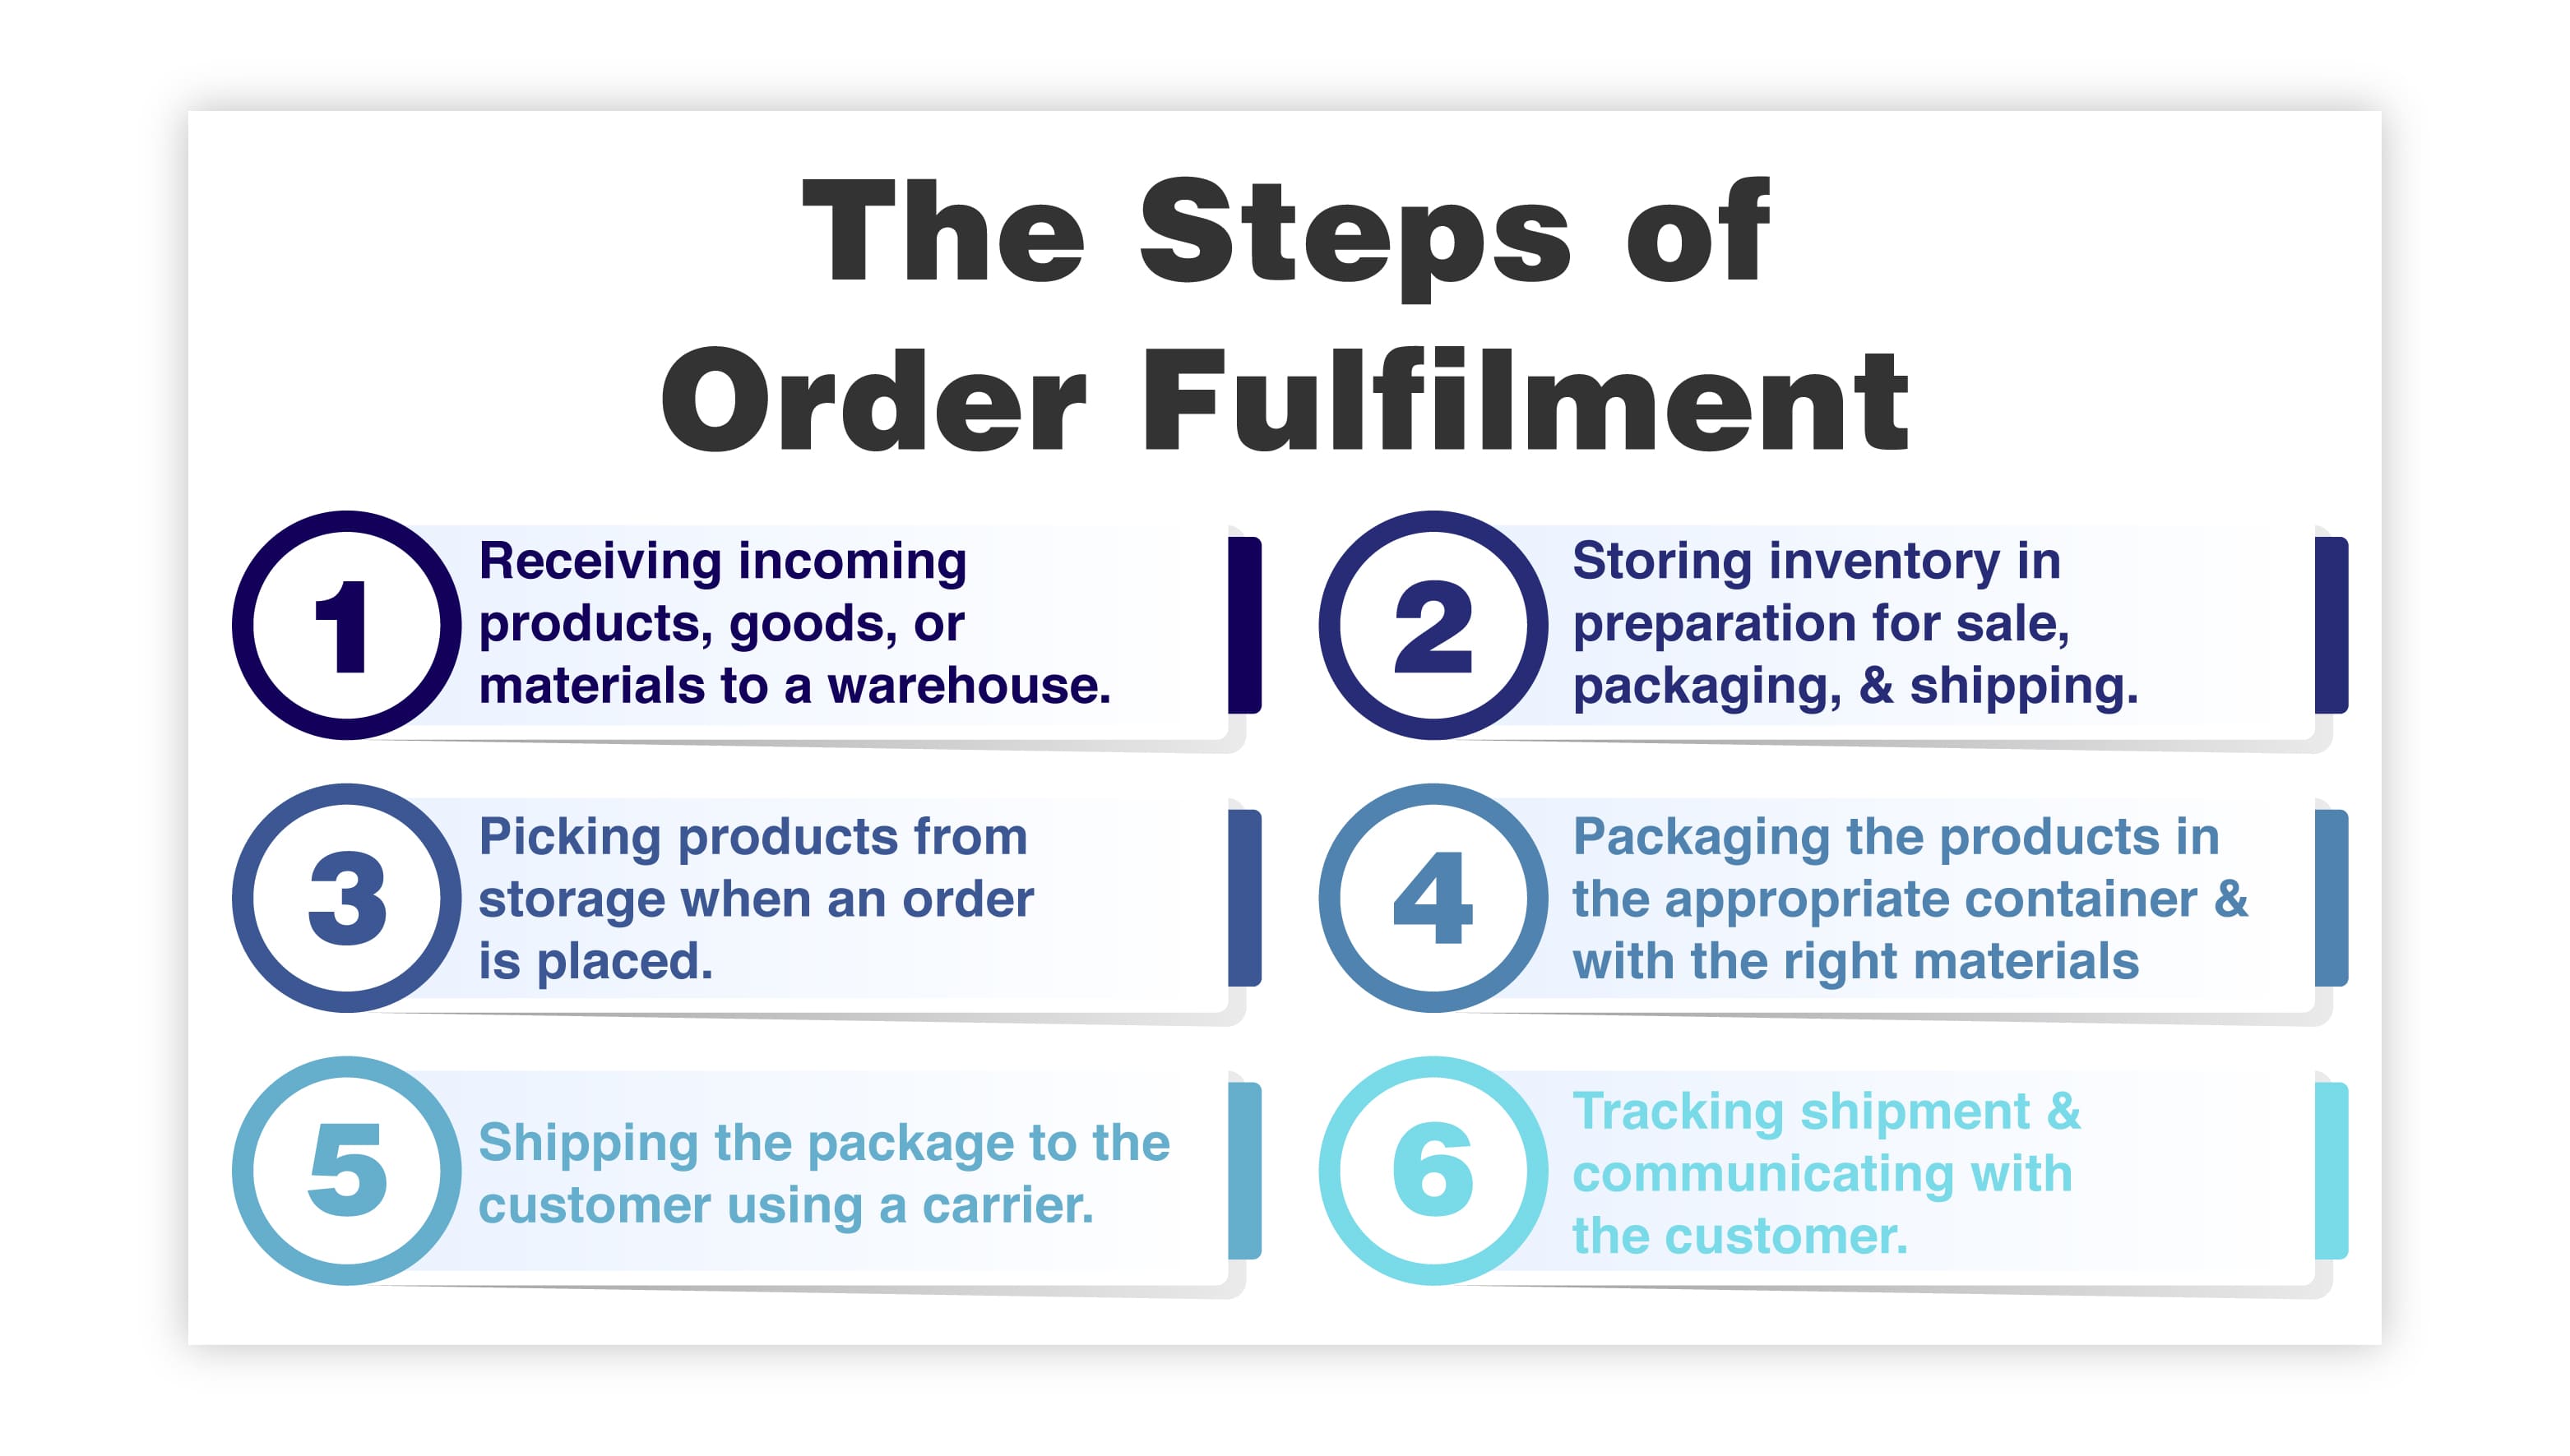 The Steps of Order Fulfilment